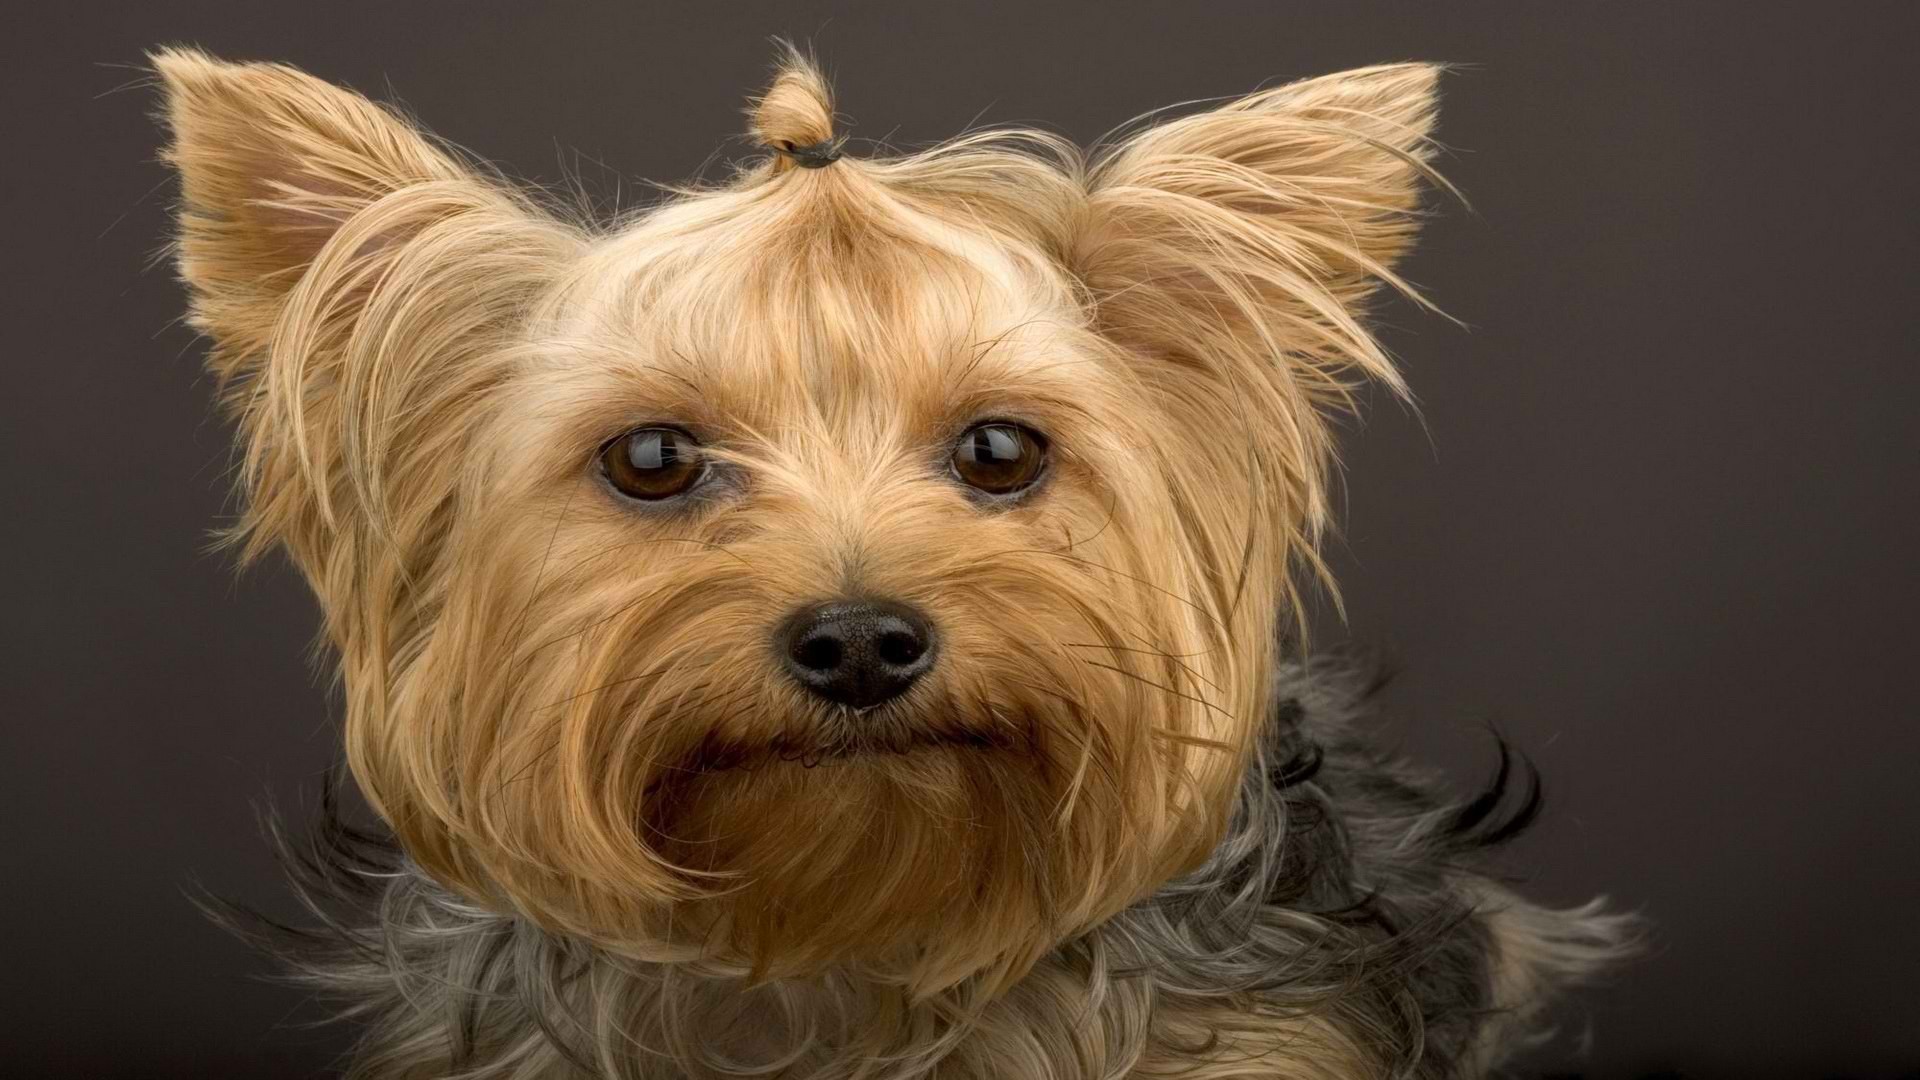 Wallpapers Yorkshire Terrier dog on the desktop